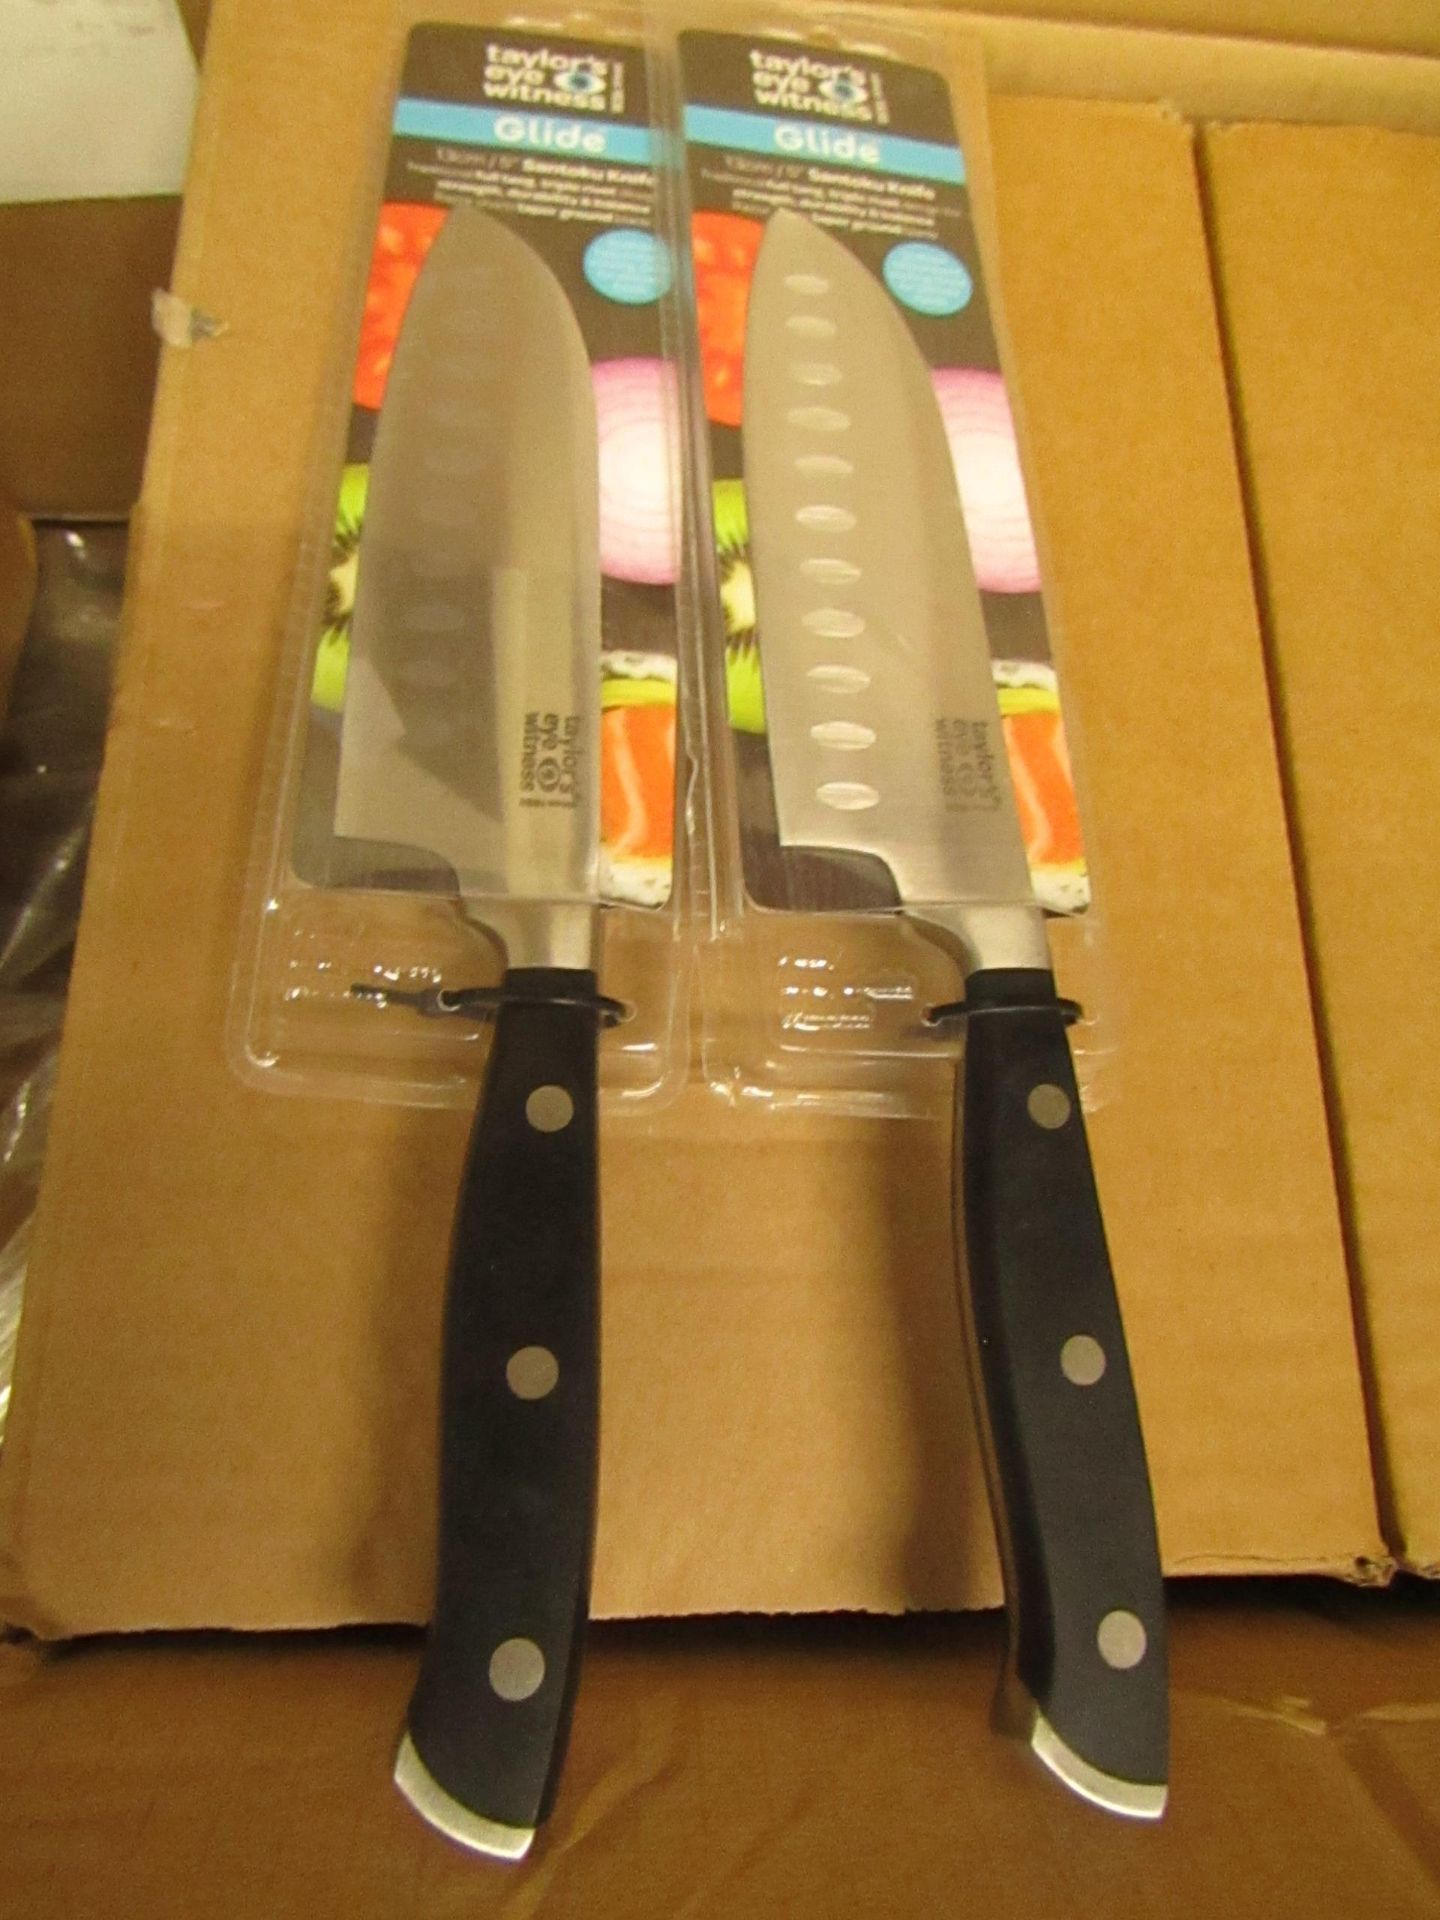 2 x Taylors eye Witness Glide 13cm Santoku Knives. New & packaged